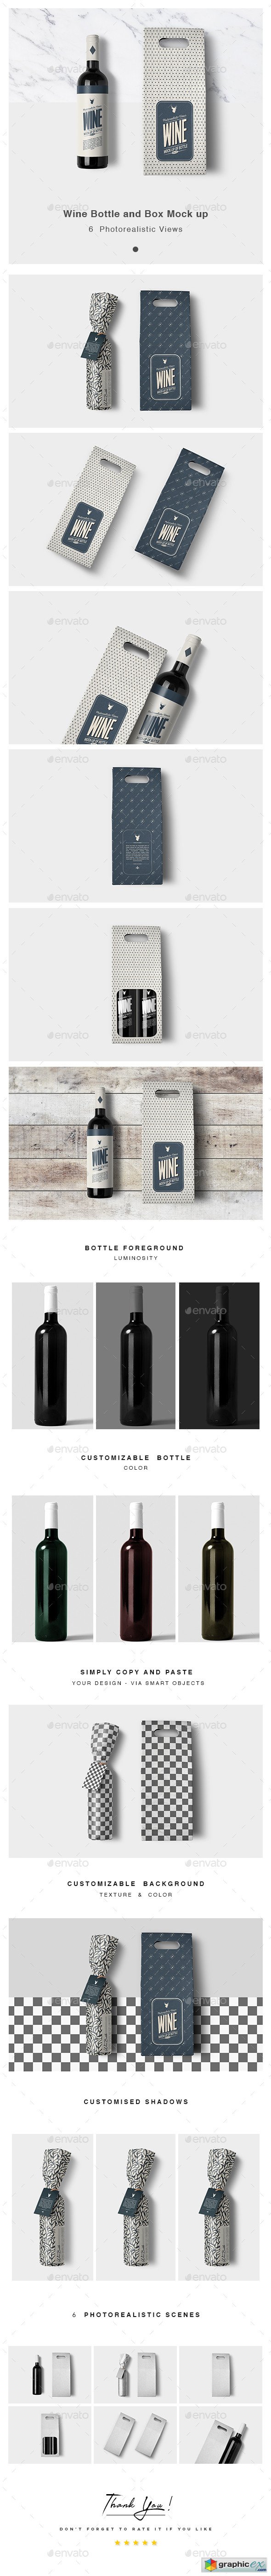 Wine Bottle and Box Mock up